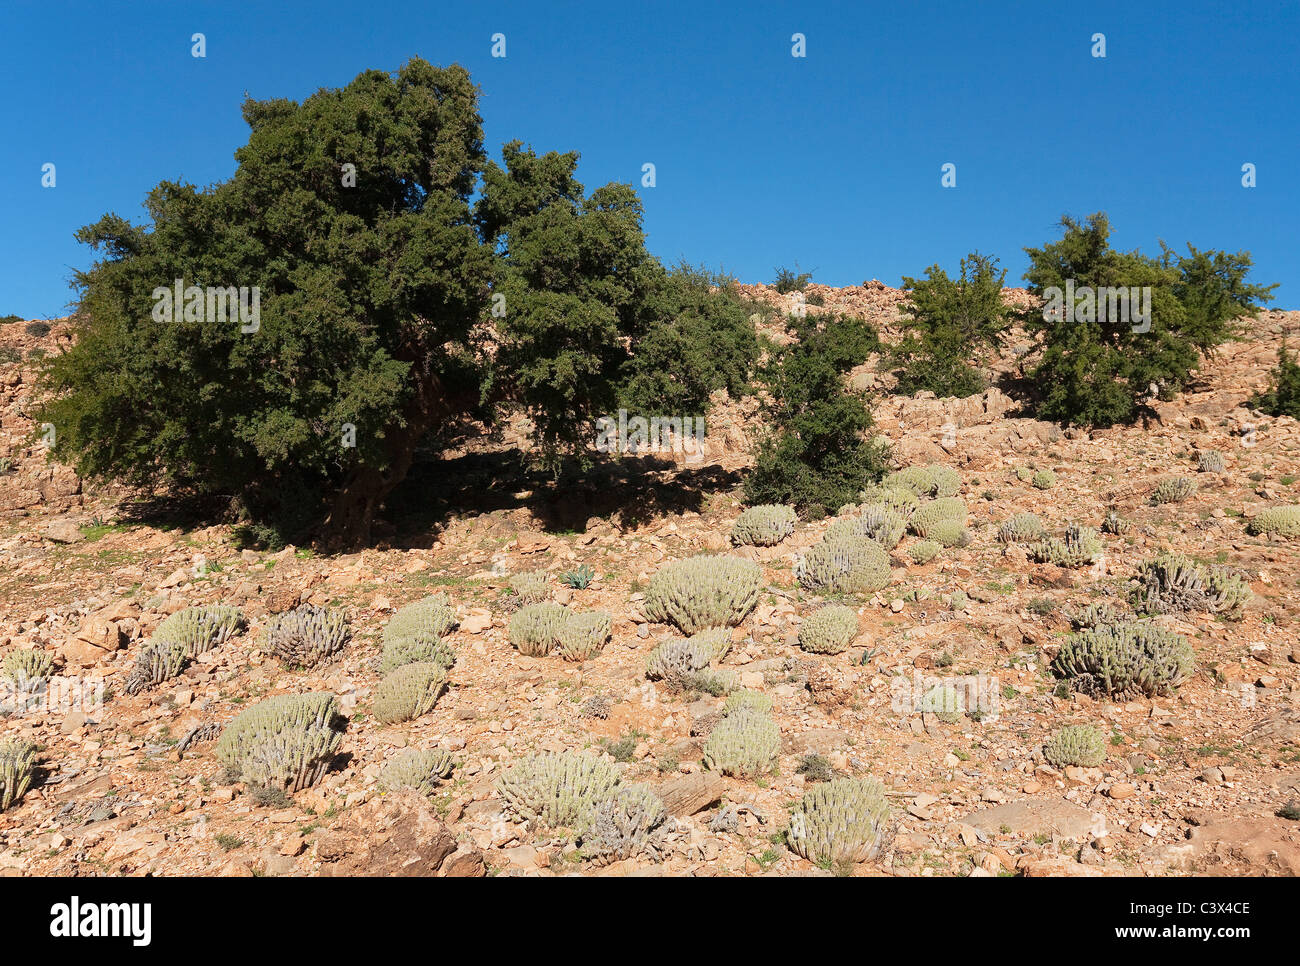 Argan trees (Argania espinosa) and the succulent Euphorbia echinus, both very common plants of the Anti-Atlas mountains. Morocco Stock Photo